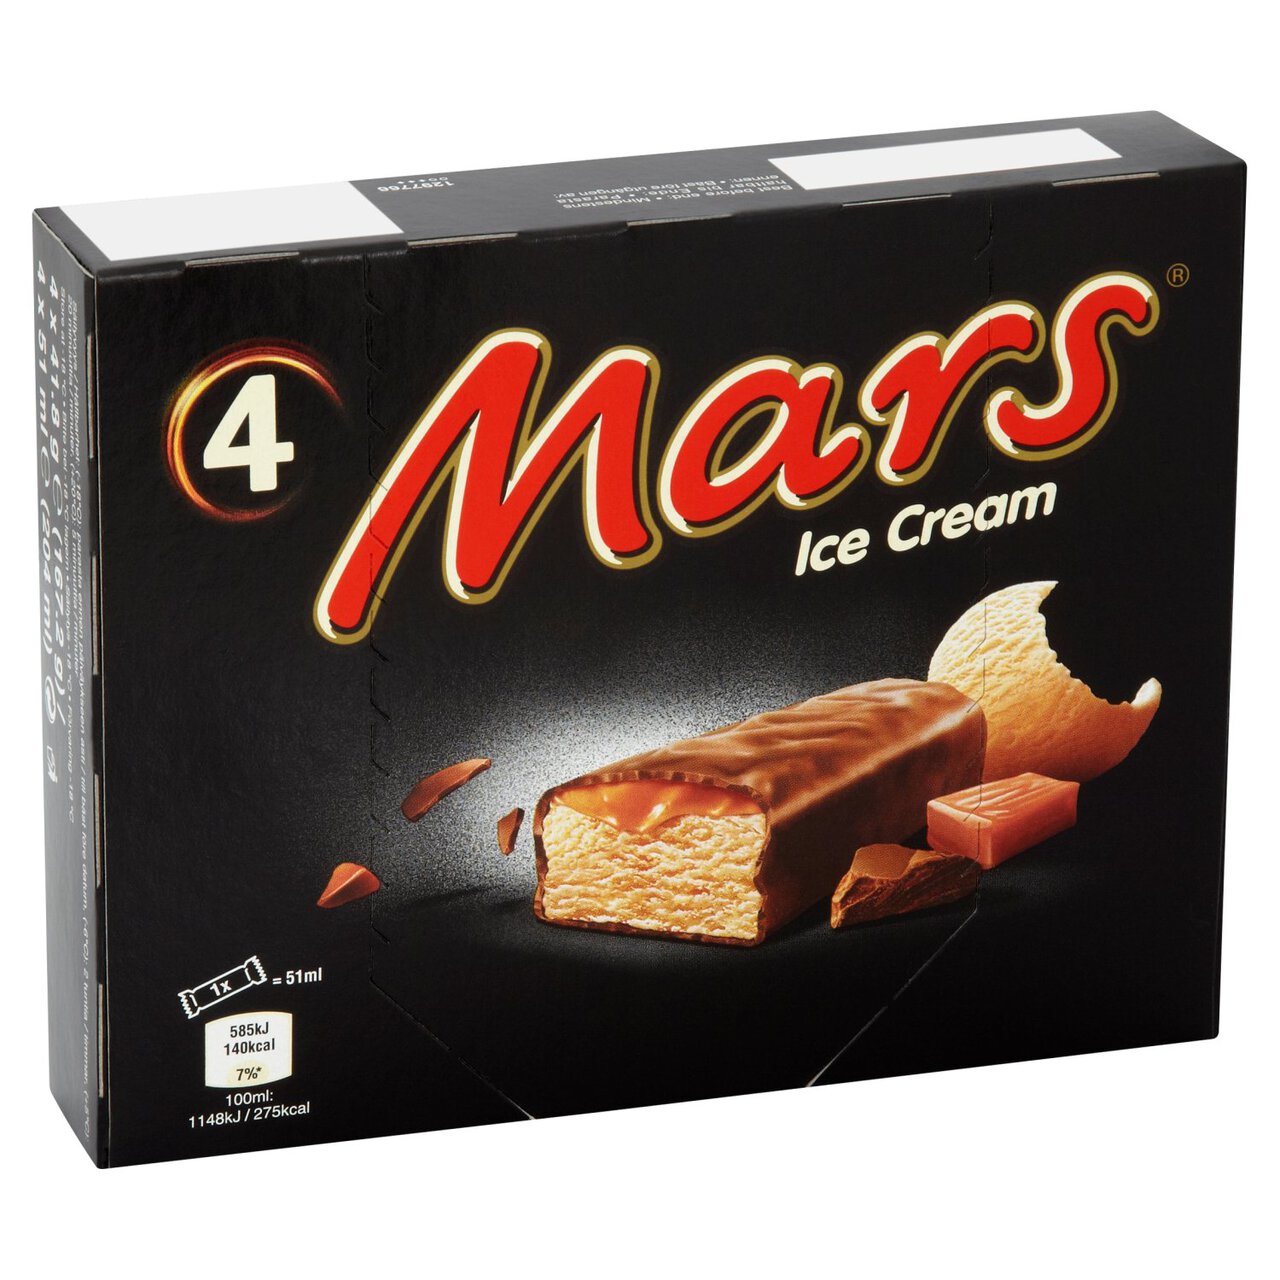 Mars Ice Cream Bars 4 x 51ml